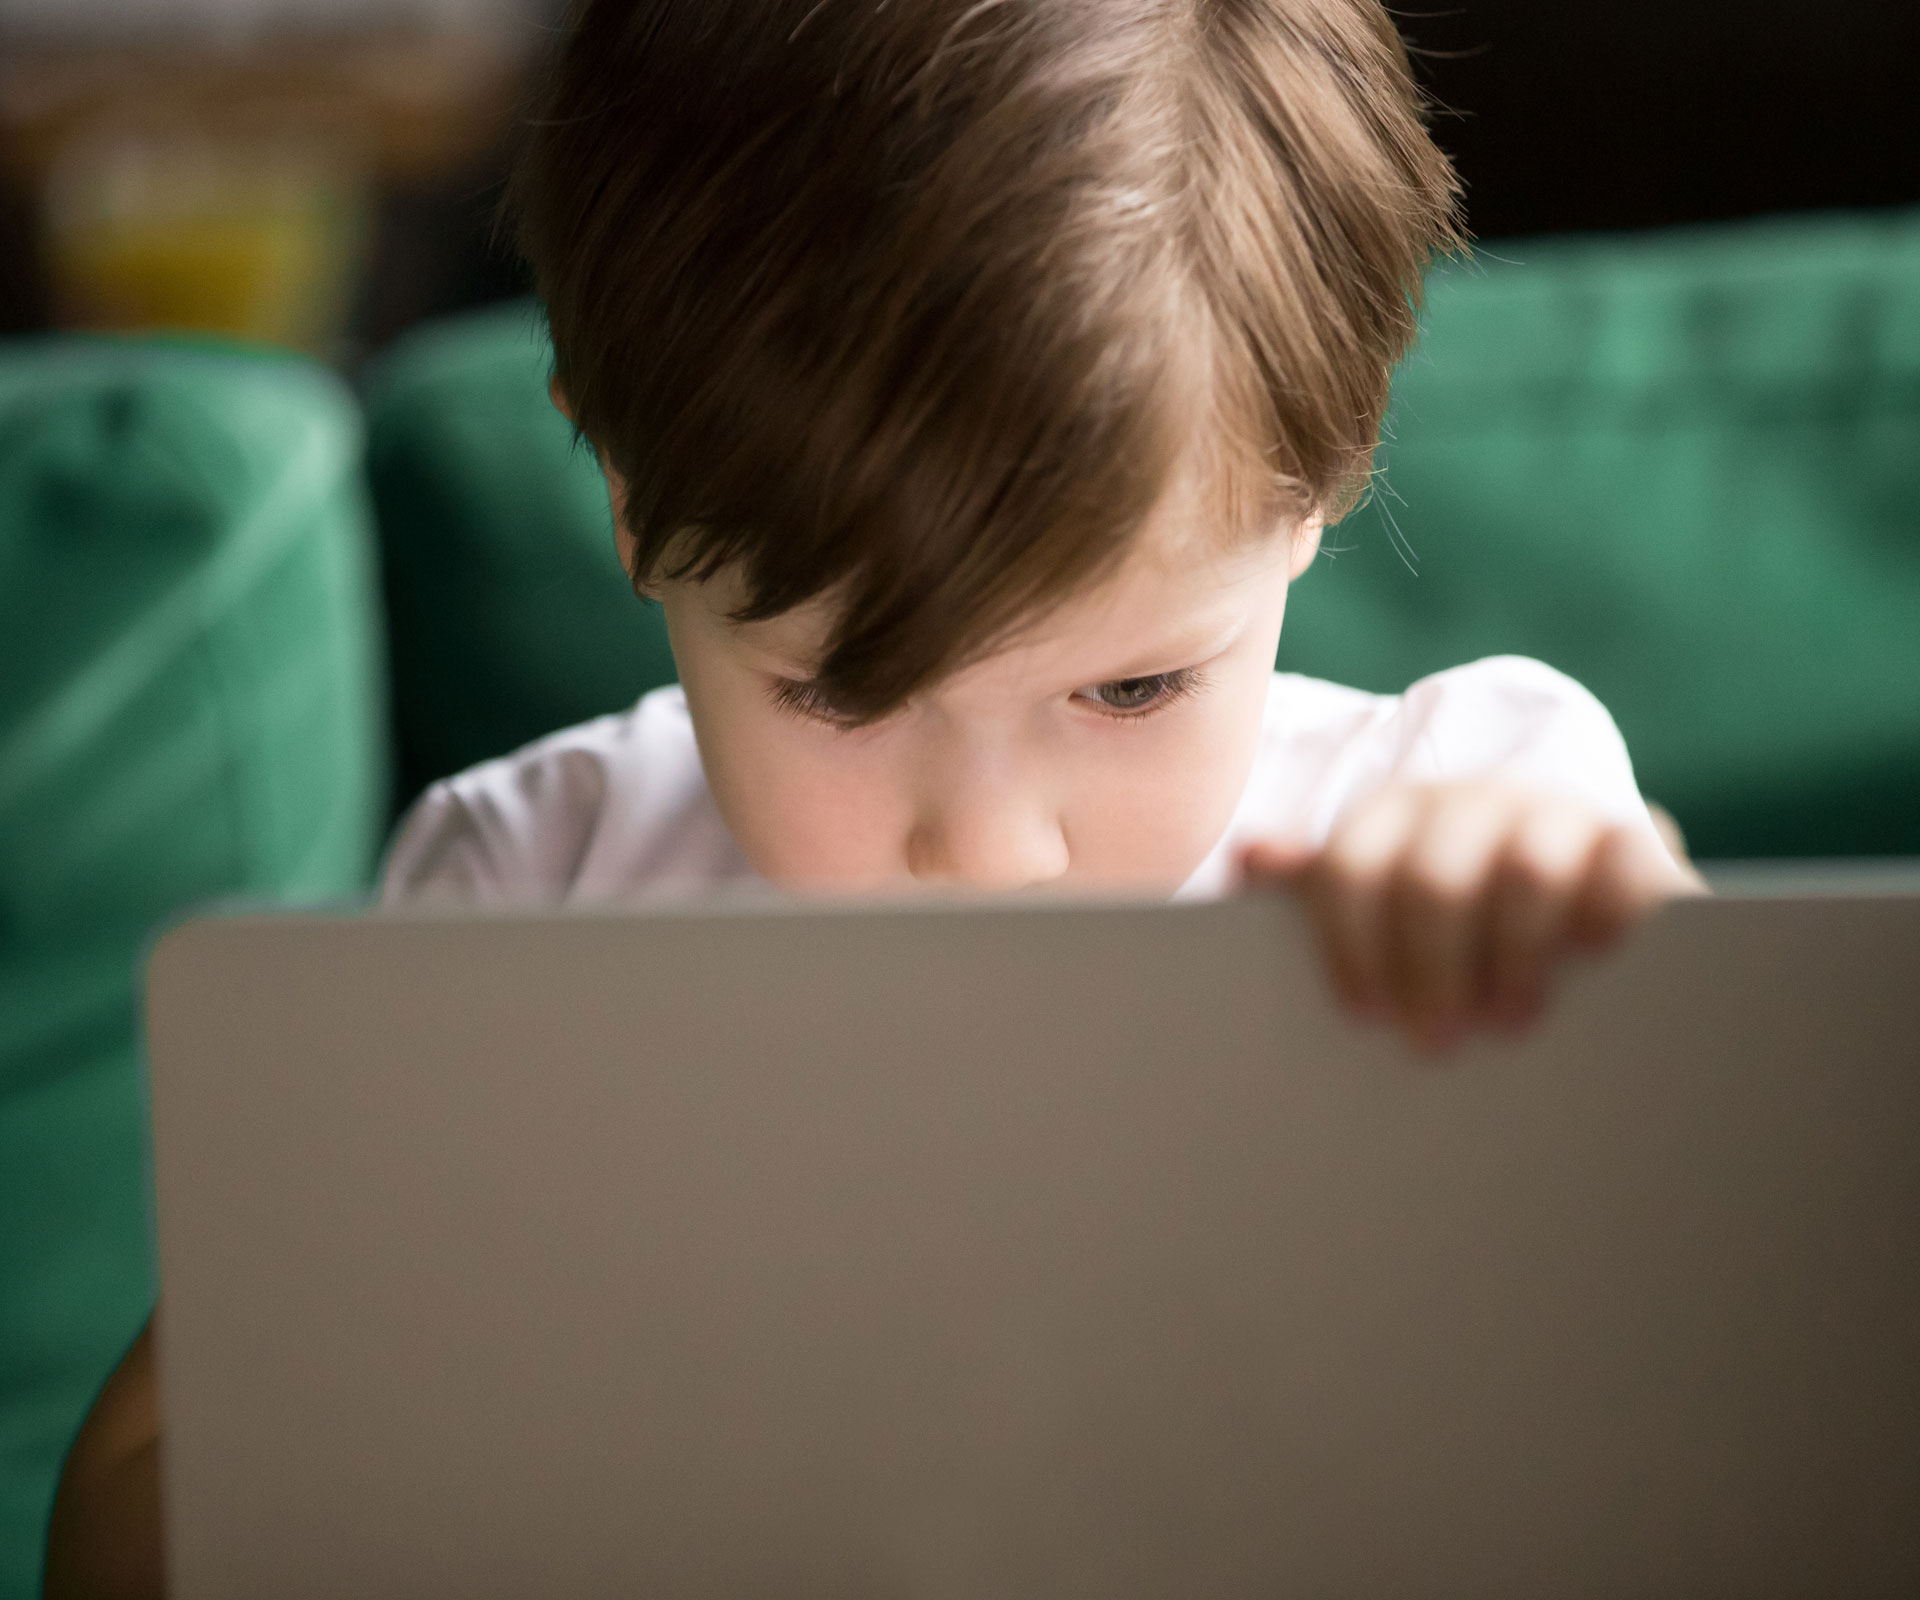 What Internet rules do Canadian parents enforce?